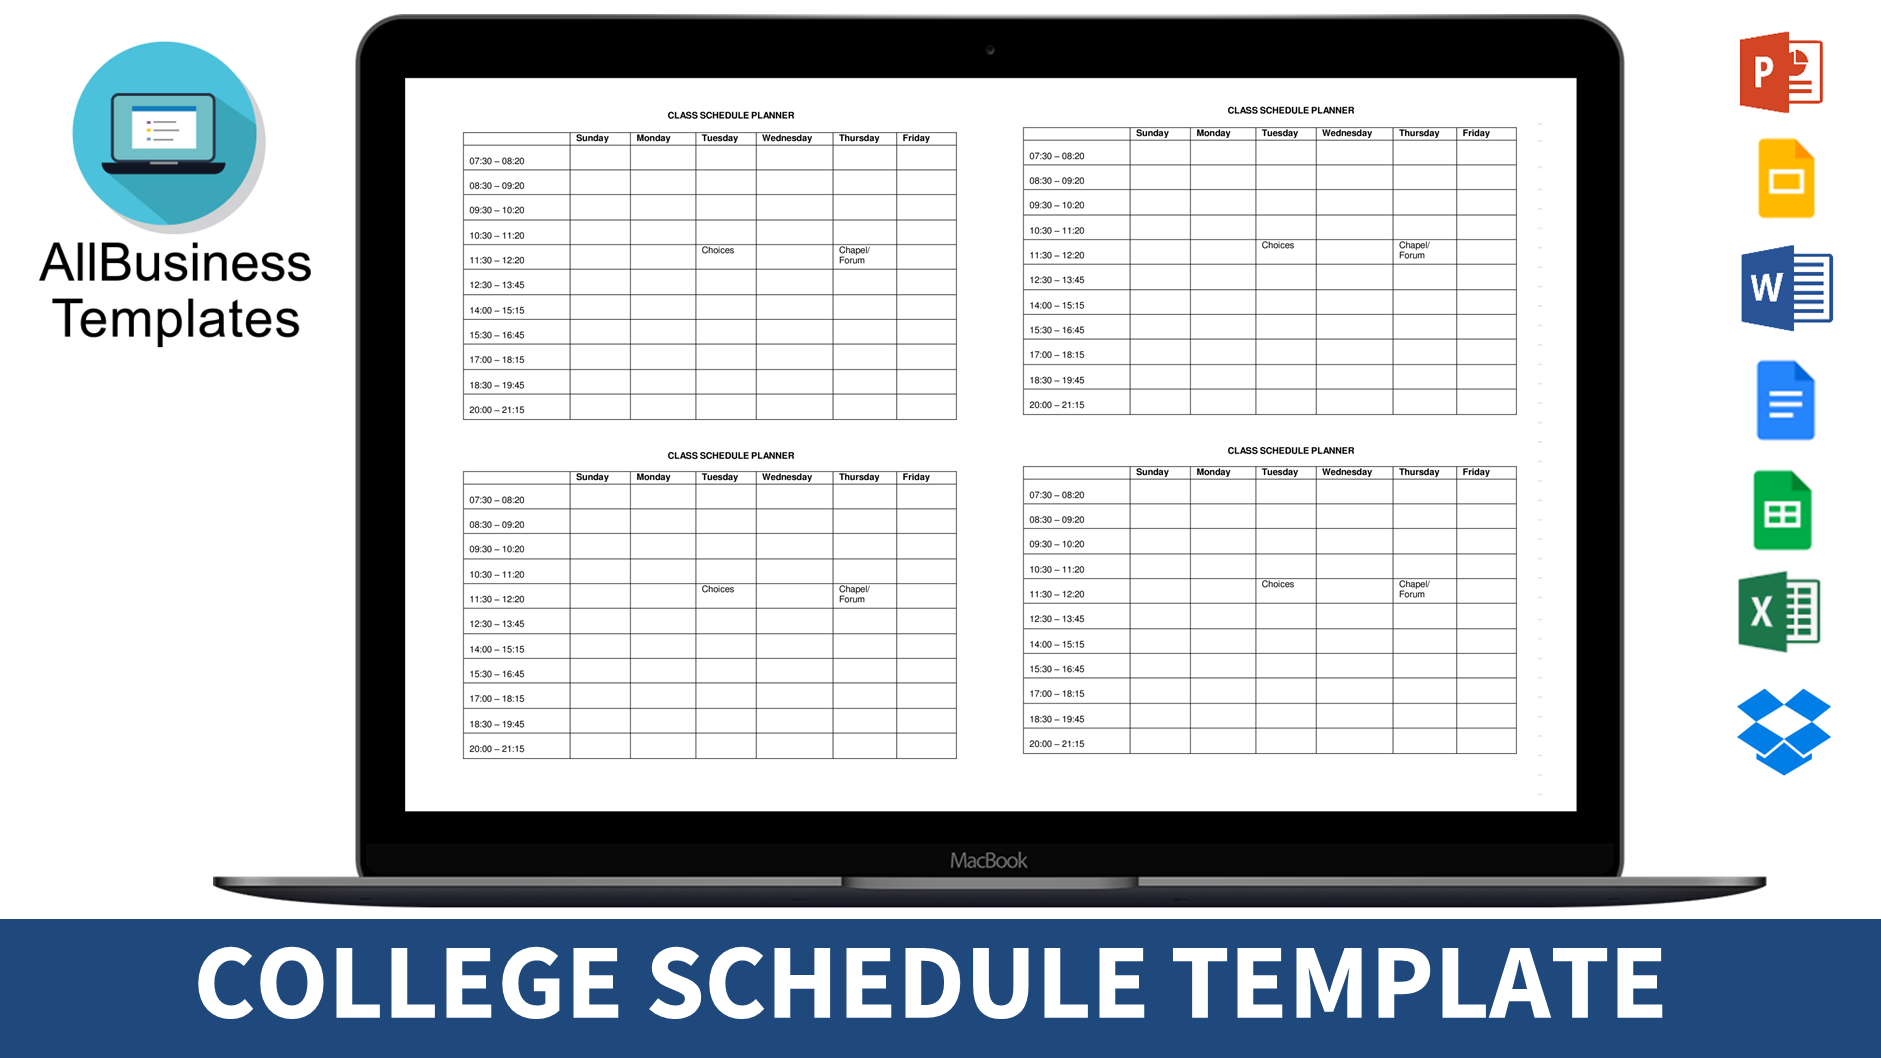 Create Class Schedule Template from www.allbusinesstemplates.com